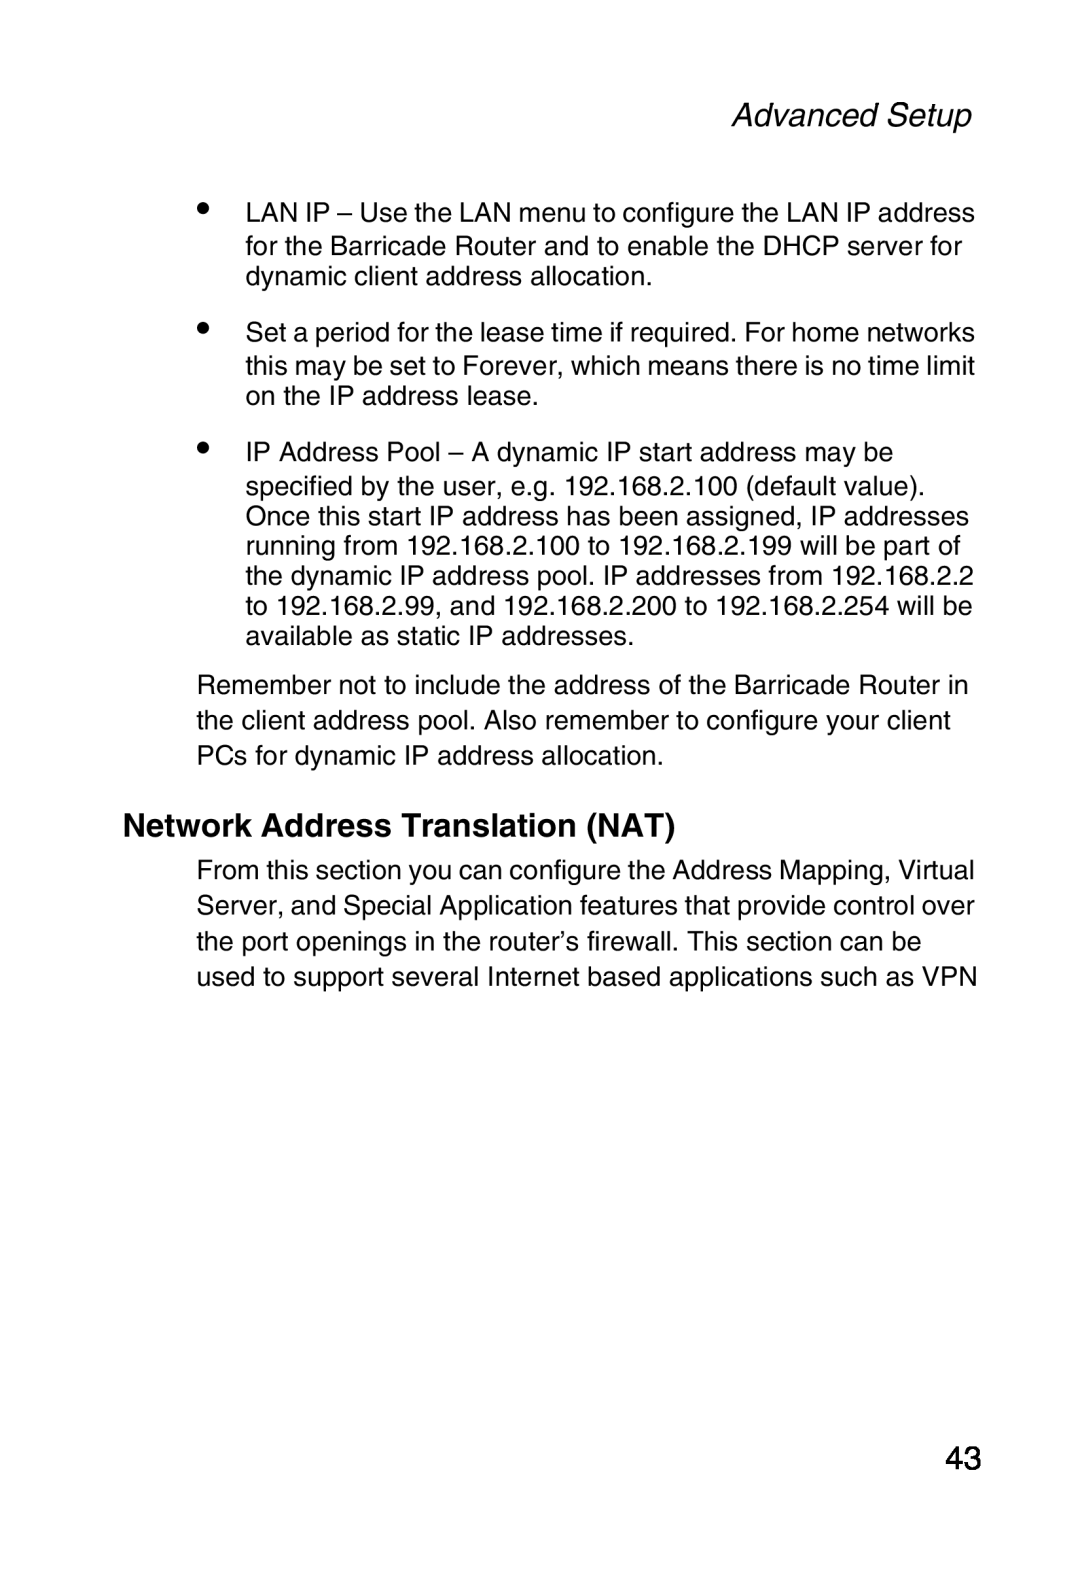 Sharp S M C 7 0 0 4 A B R, SMC7004ABR manual Network Address Translation NAT, Advanced Setup 